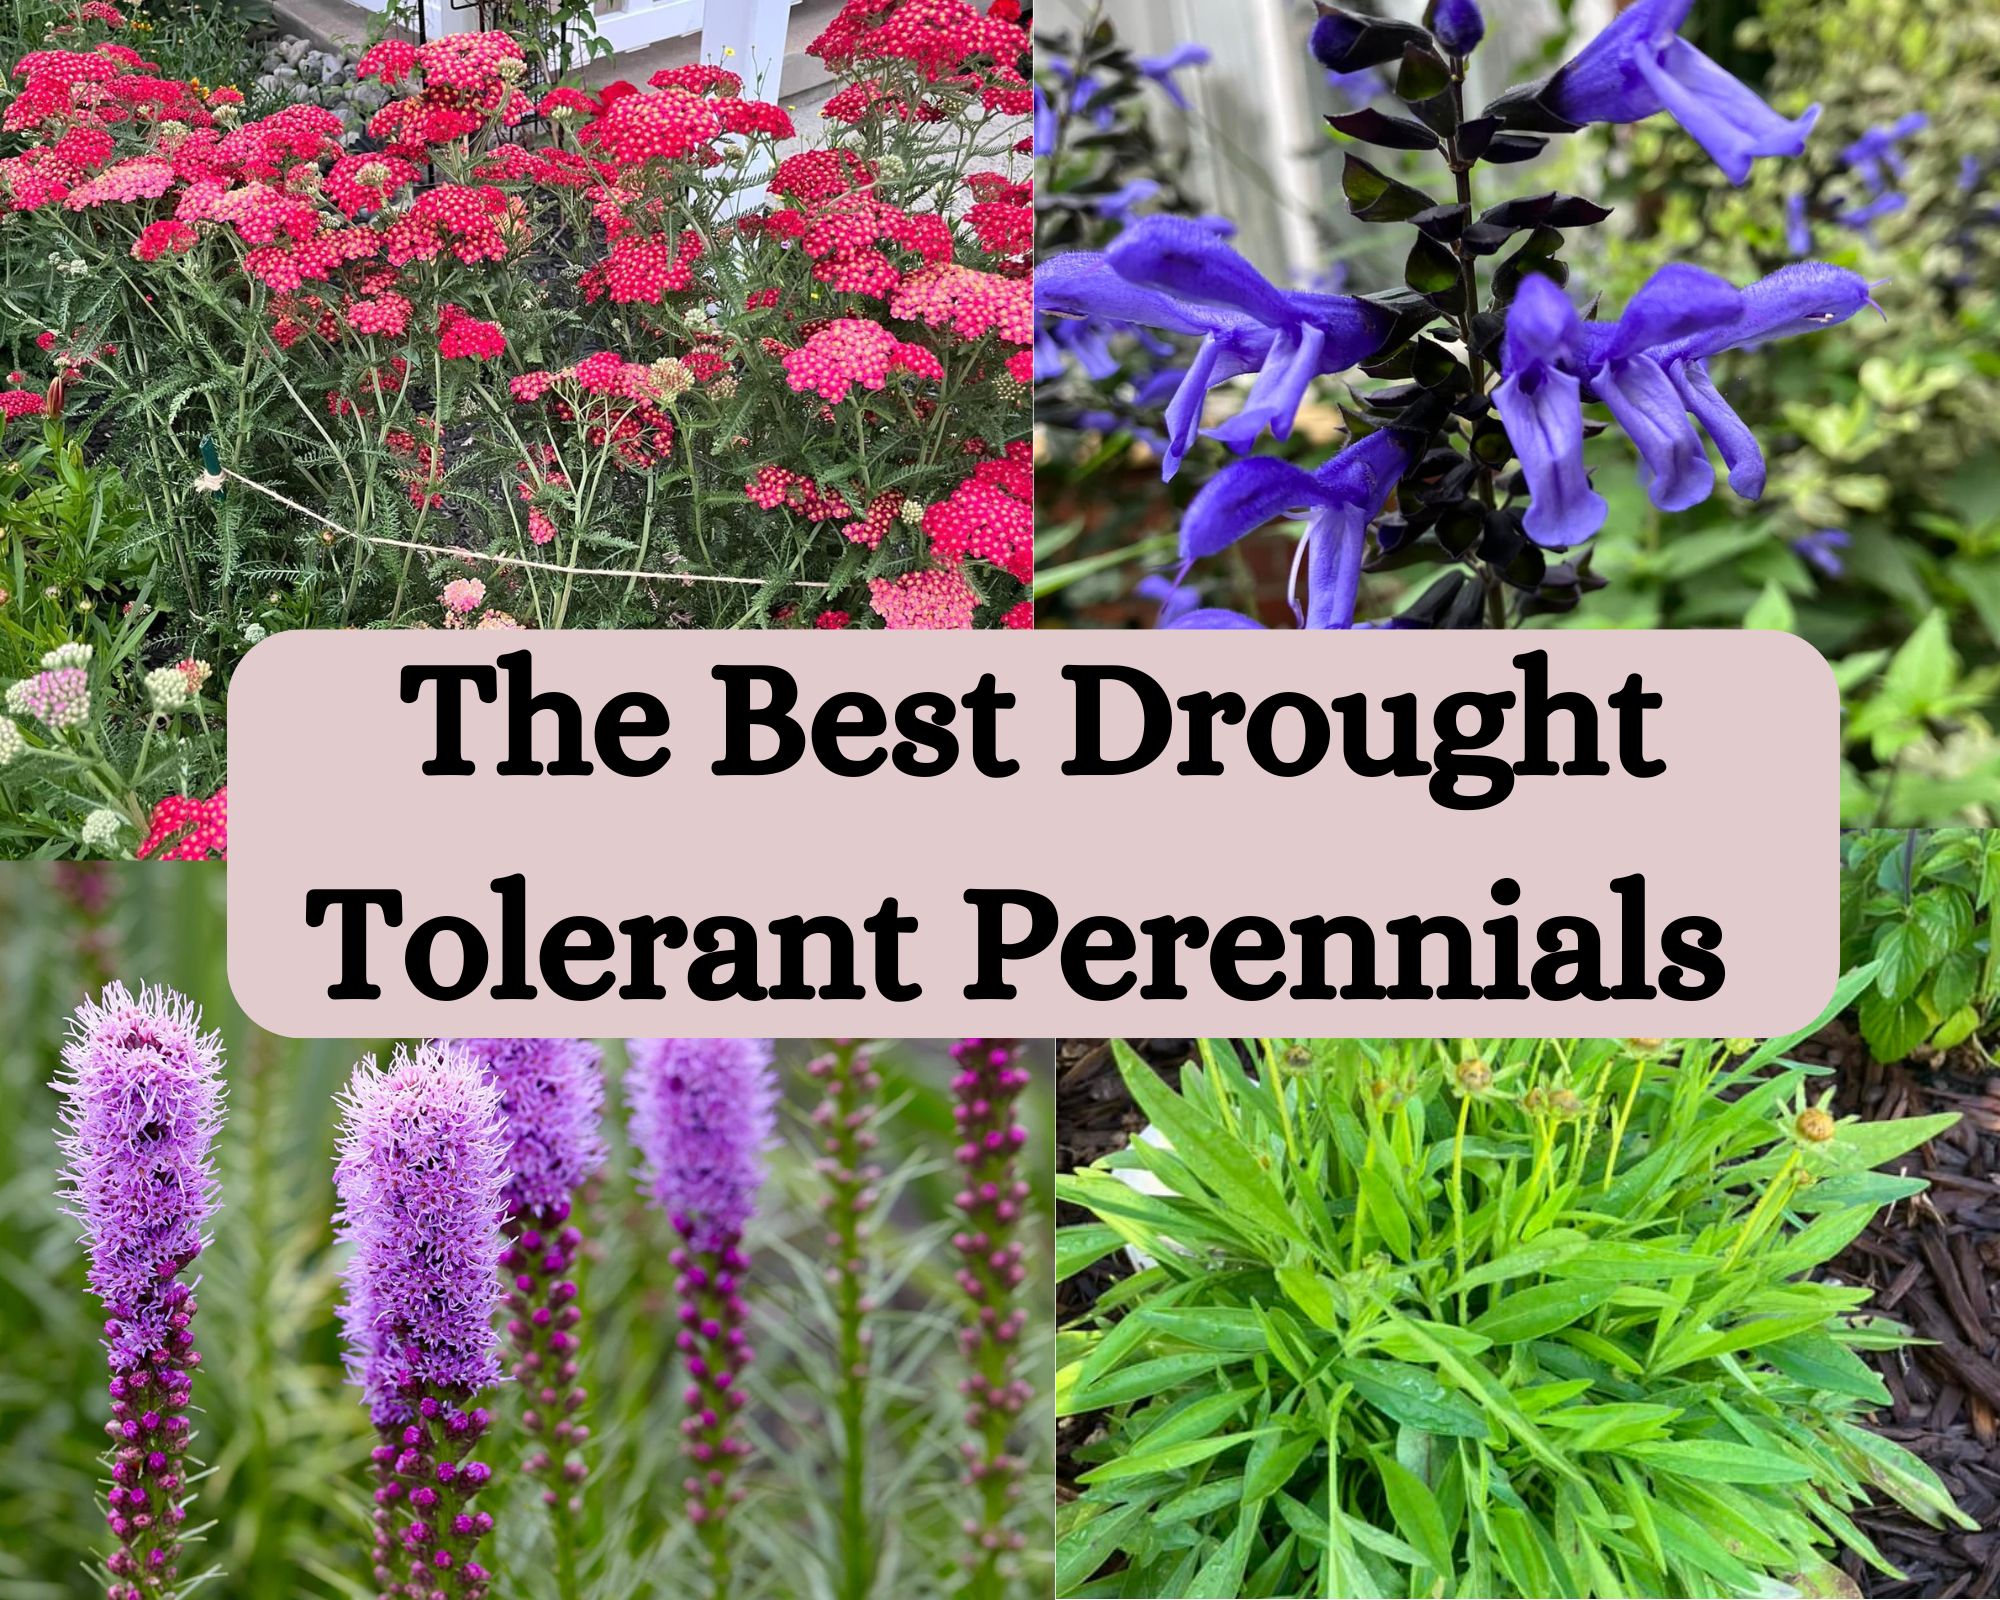 The Best Drought Tolerant Perennials